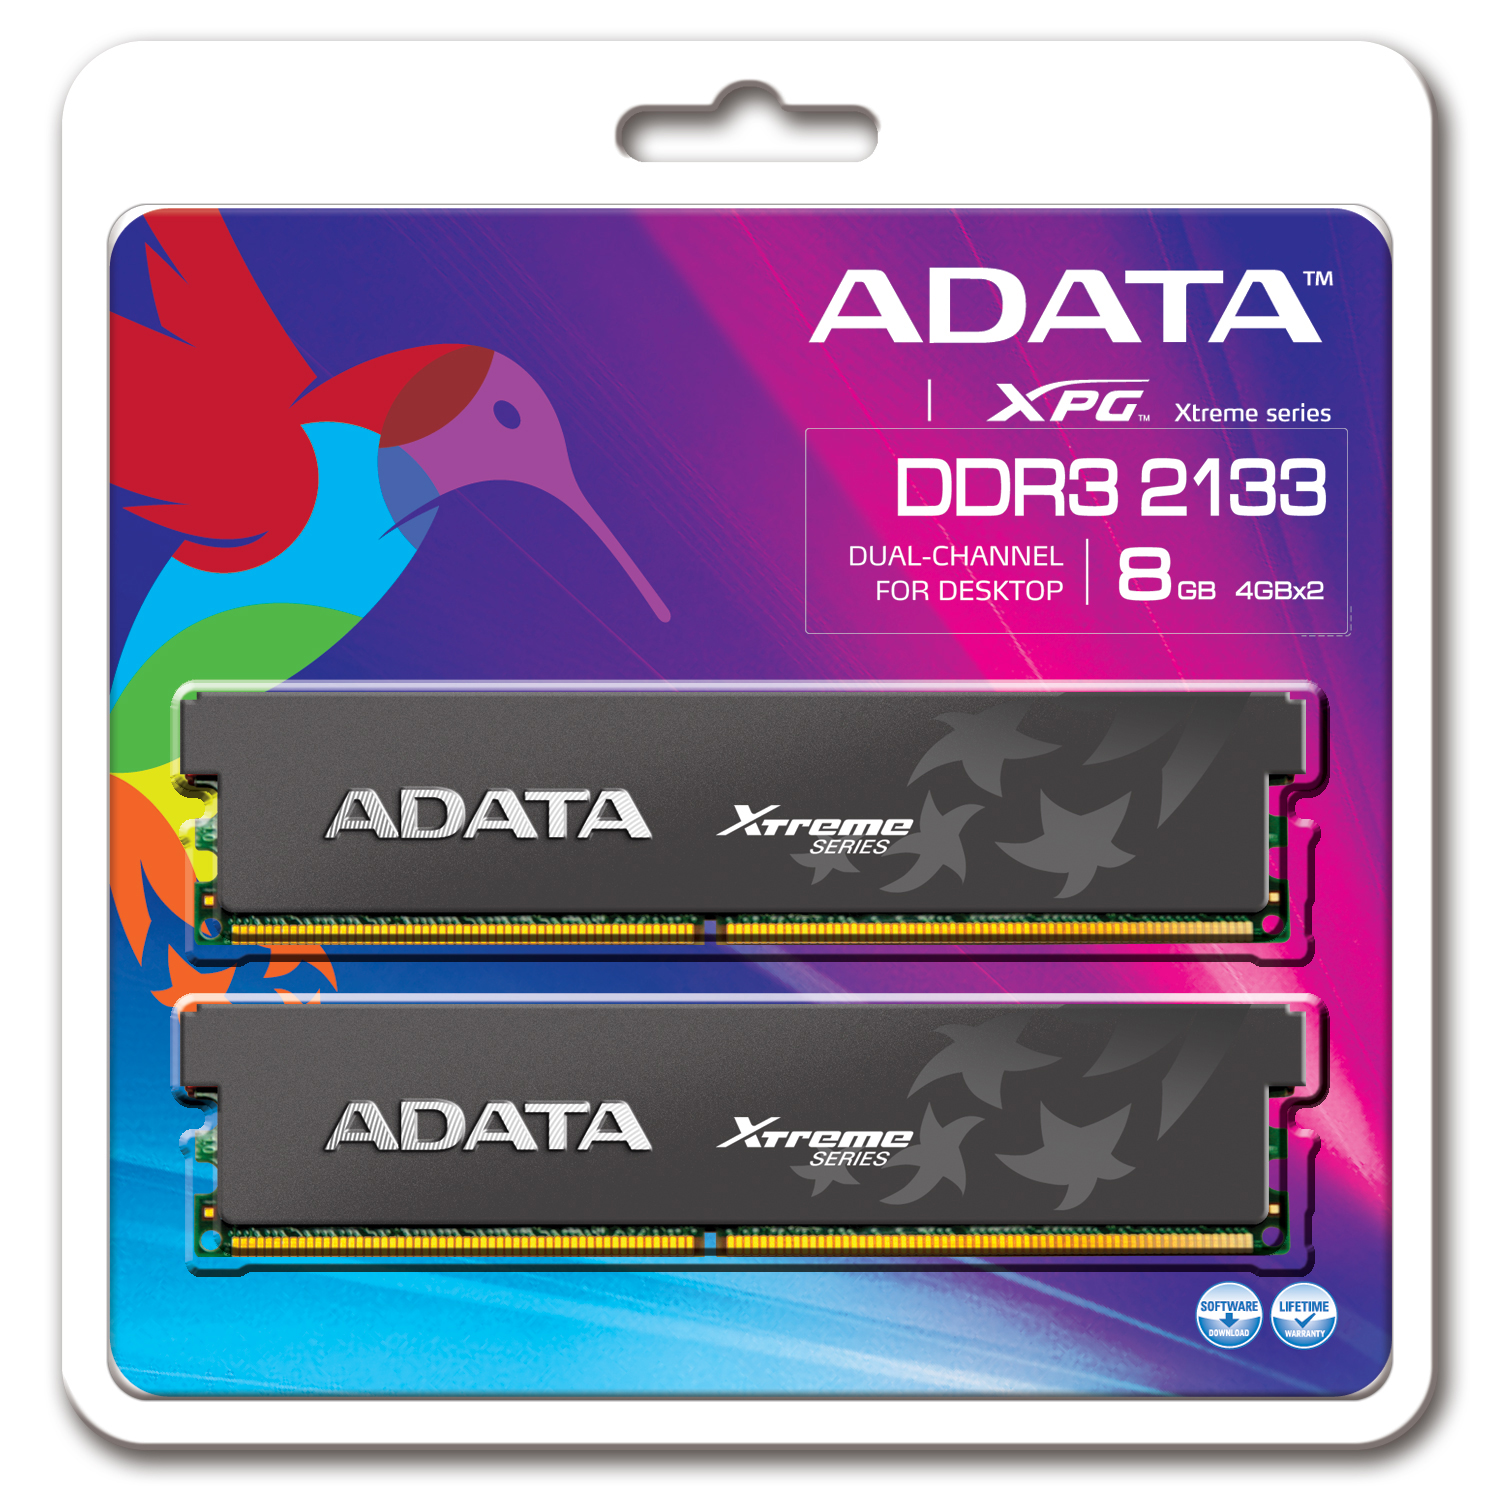 Media asset in full size related to 3dfxzone.it news item entitled as follows: ADATA amplia la linea di RAM XPG Xtreme con 2 kit DDR3-2133X | Image Name: news17235_2.jpg